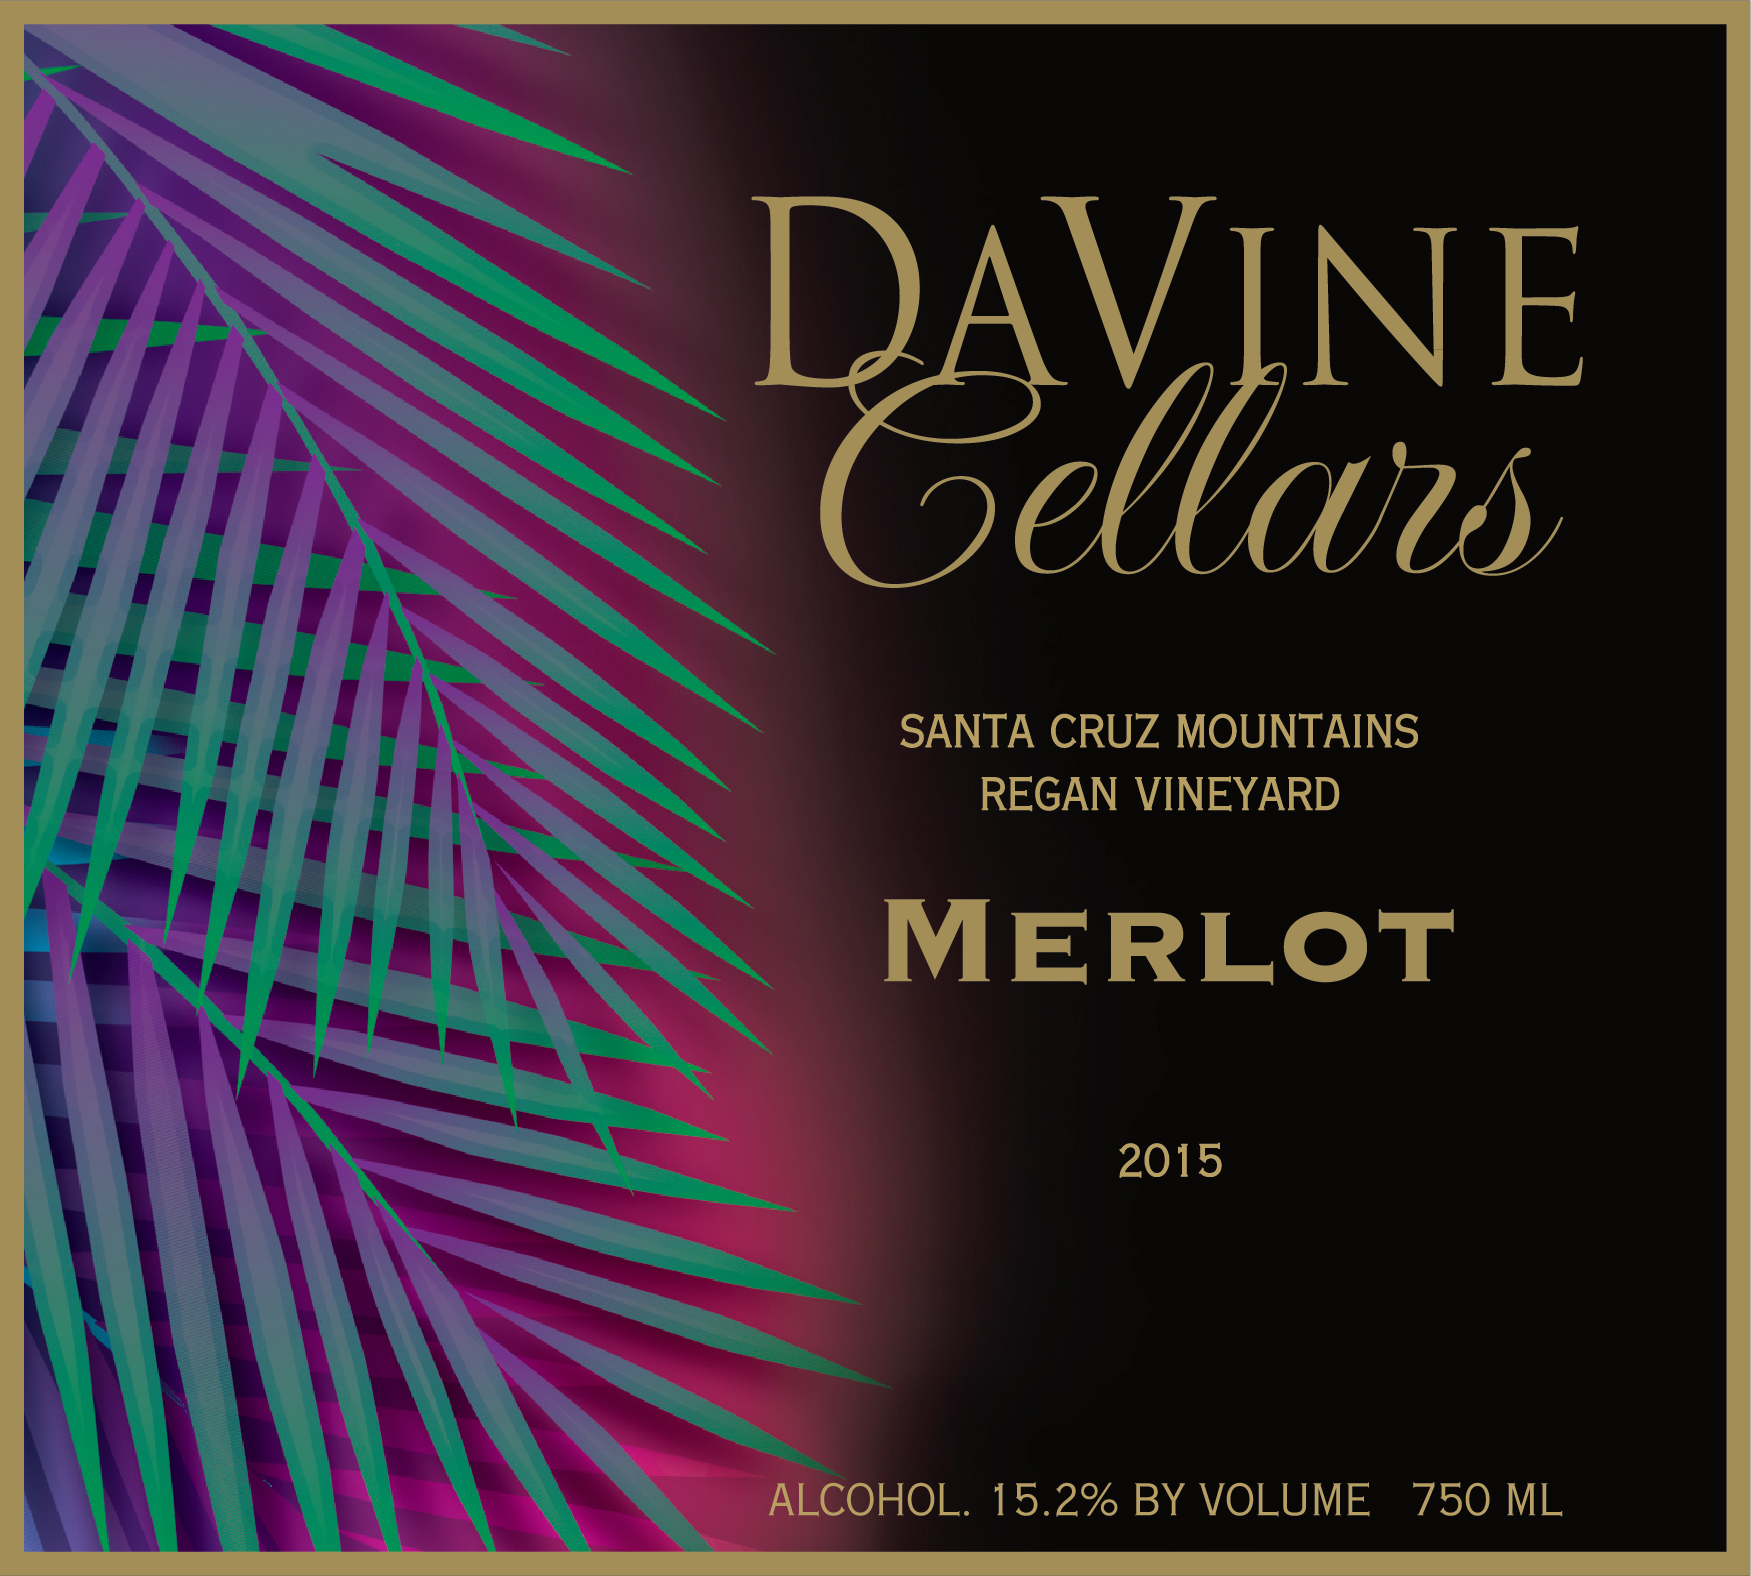 Product Image for 2015 Santa Cruz Mountains Merlot "Flirtatious"